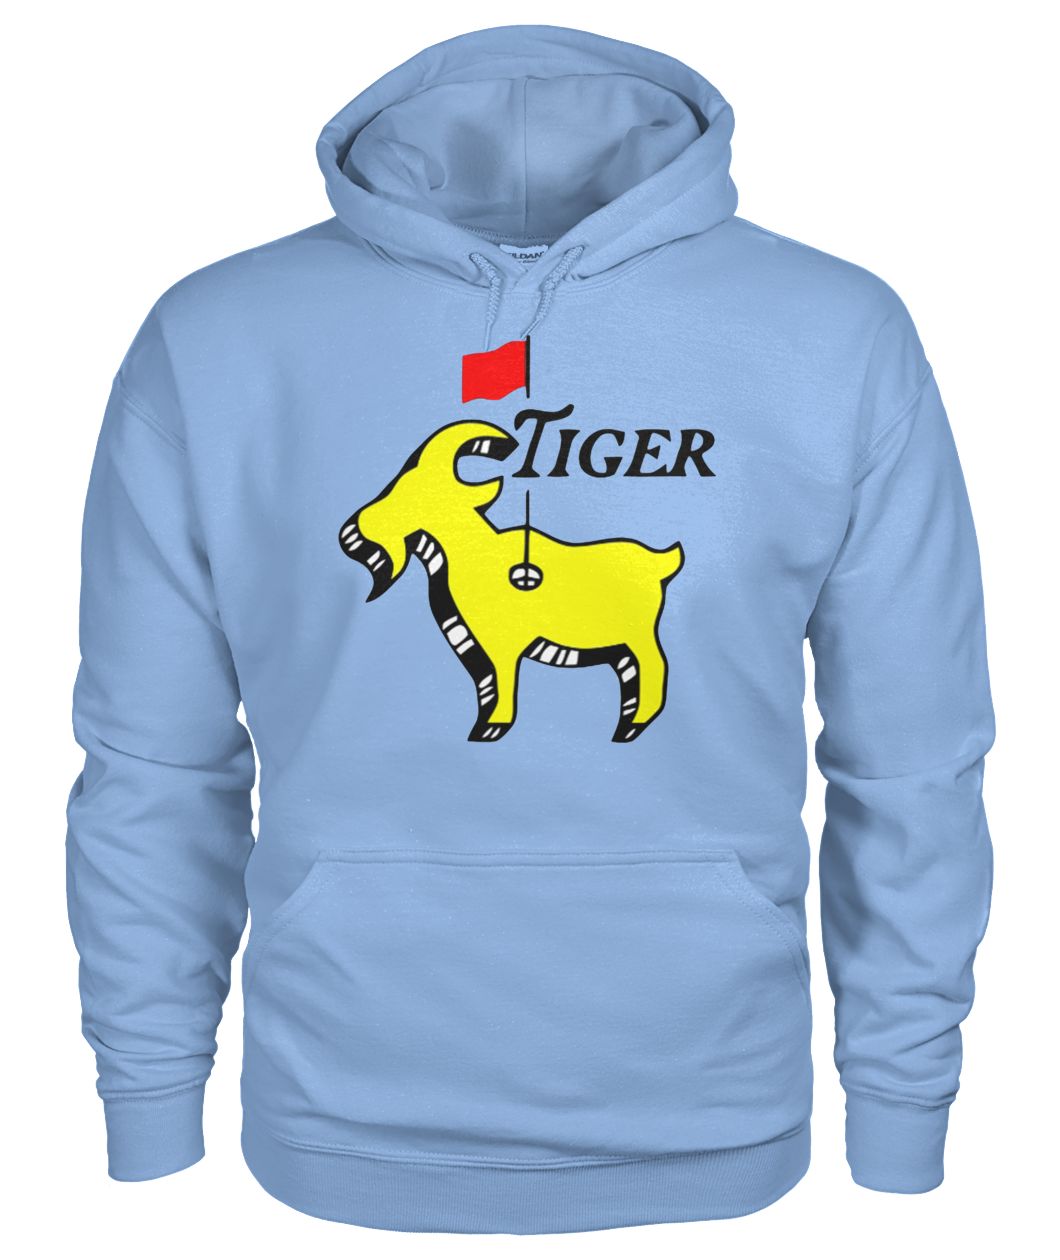 Tiger woods goat masters hoodie